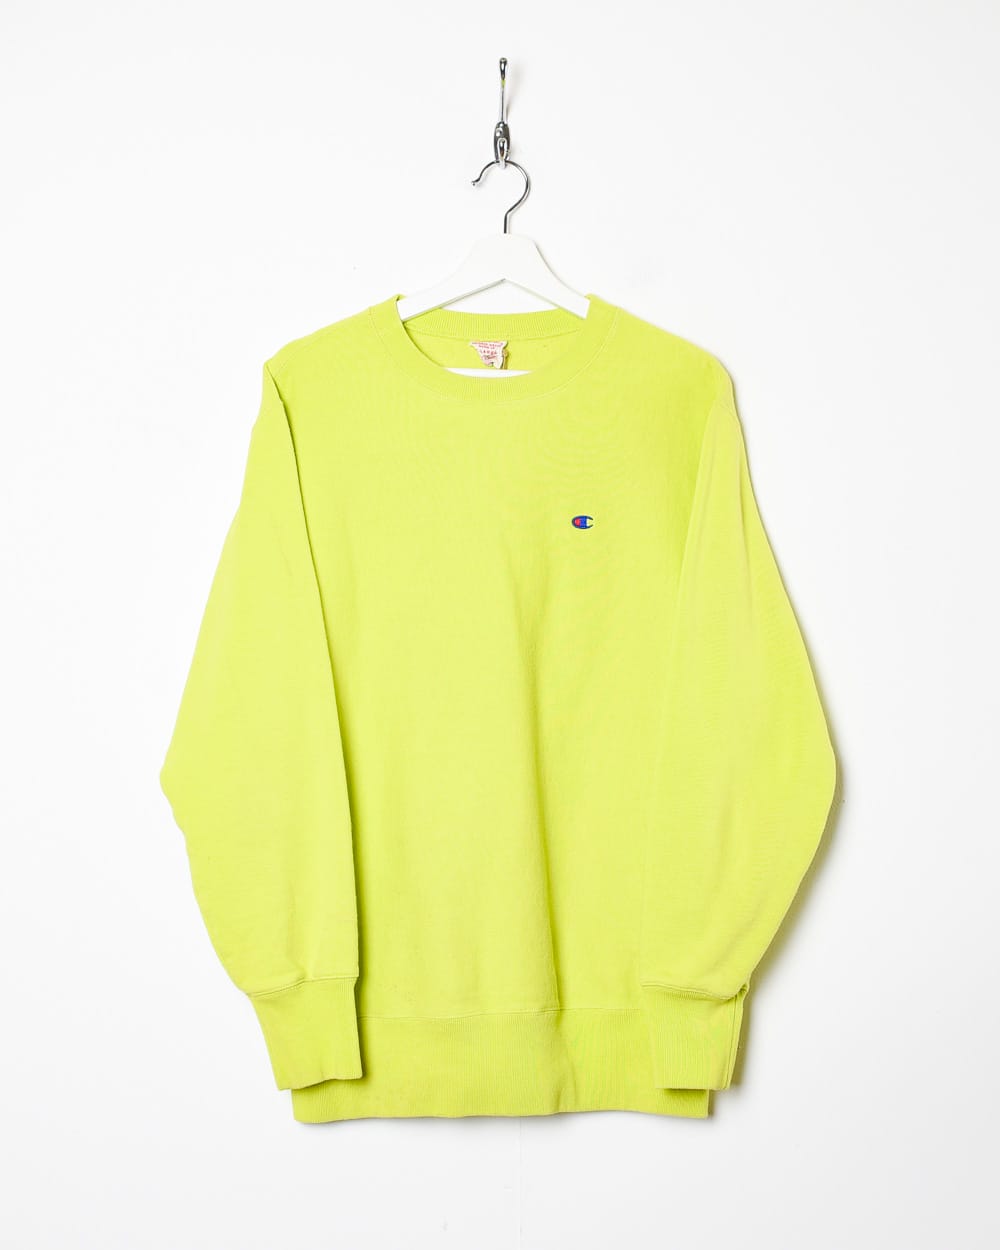 Yellow Champion Reverse Weave Sweatshirt - Large